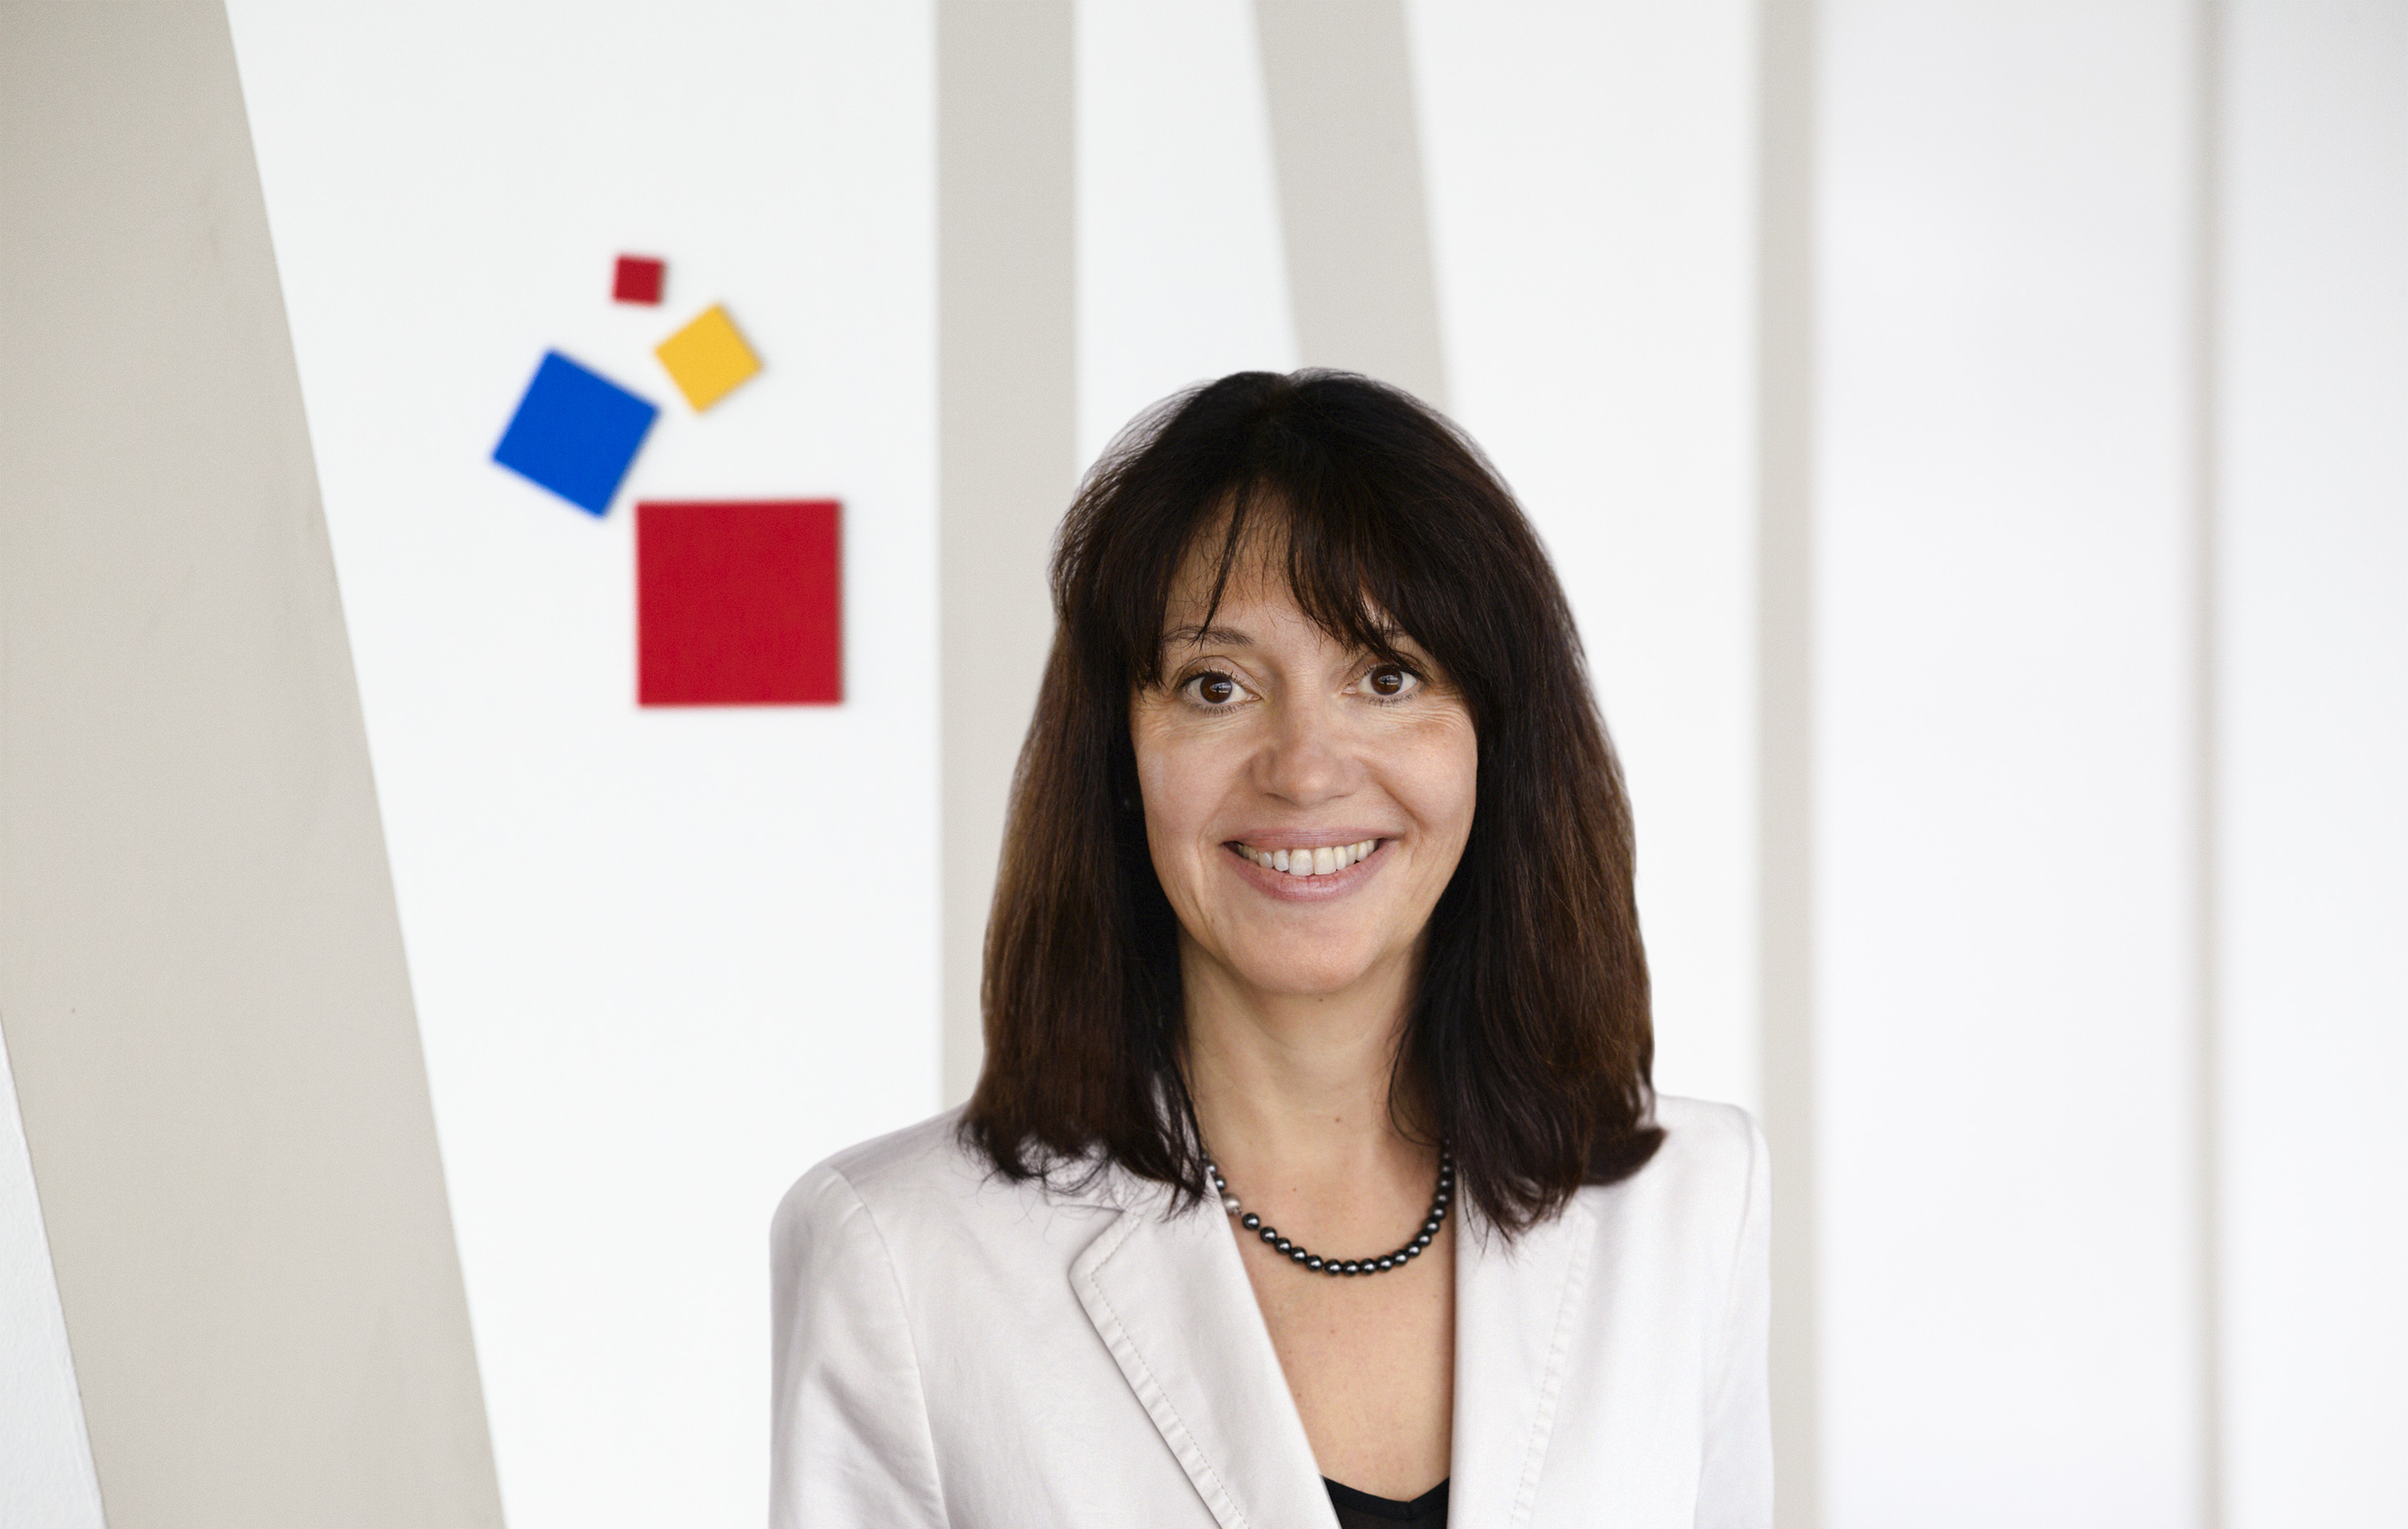 Iris Jeglitza-Moshage, member of the Board of Management of Messe Frankfurt